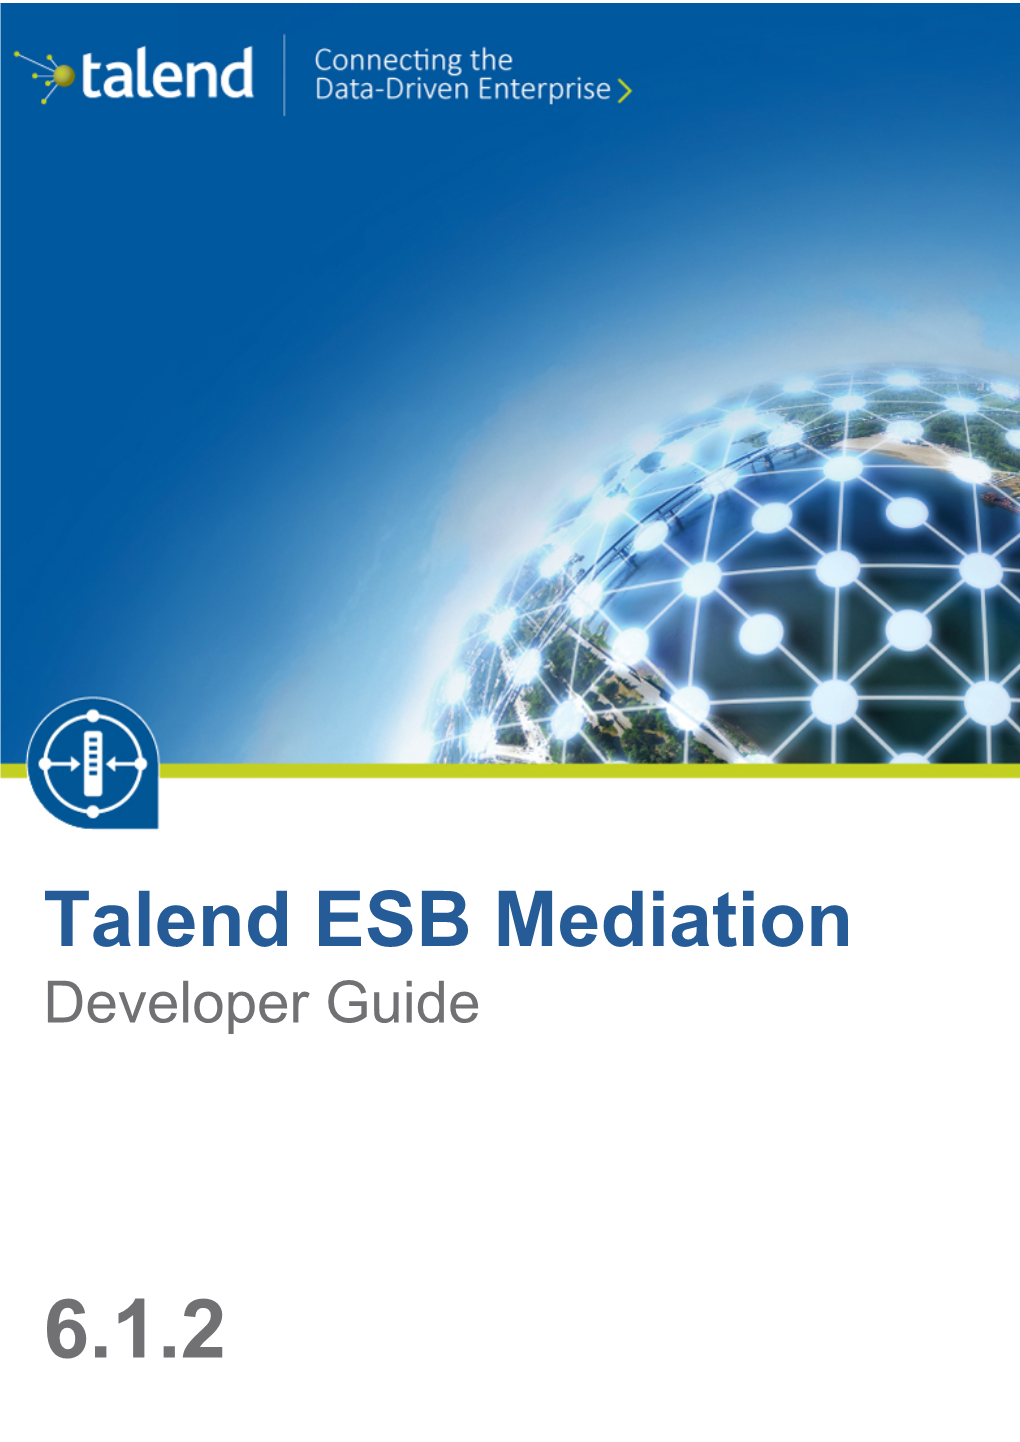 Talend ESB Mediation Developer Guide